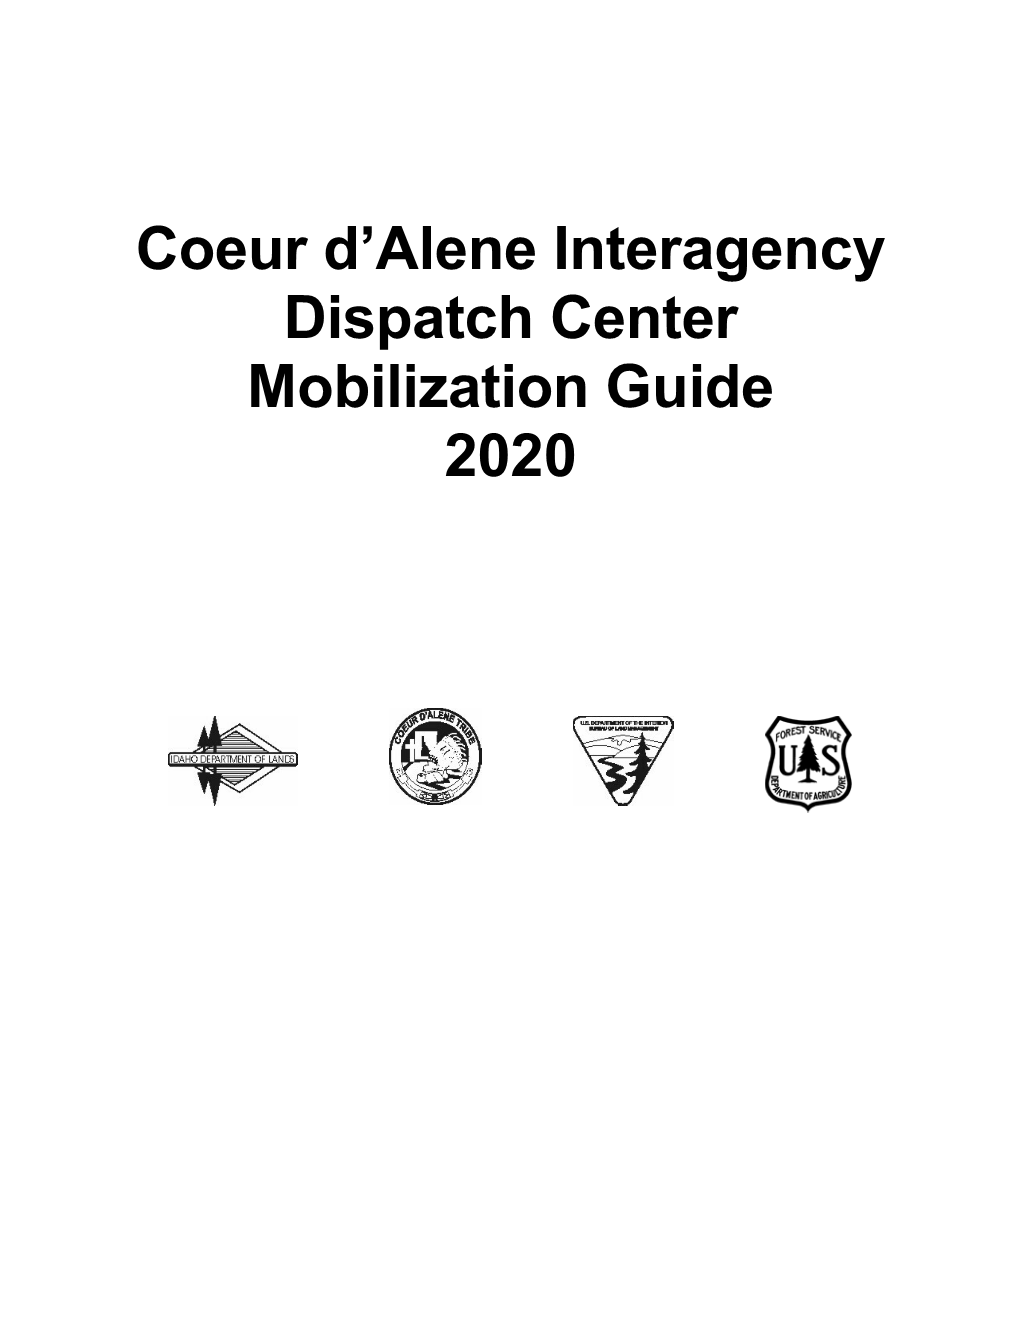 Coeur D'alene Interagency Dispatch Center Mobilization Guide 2020